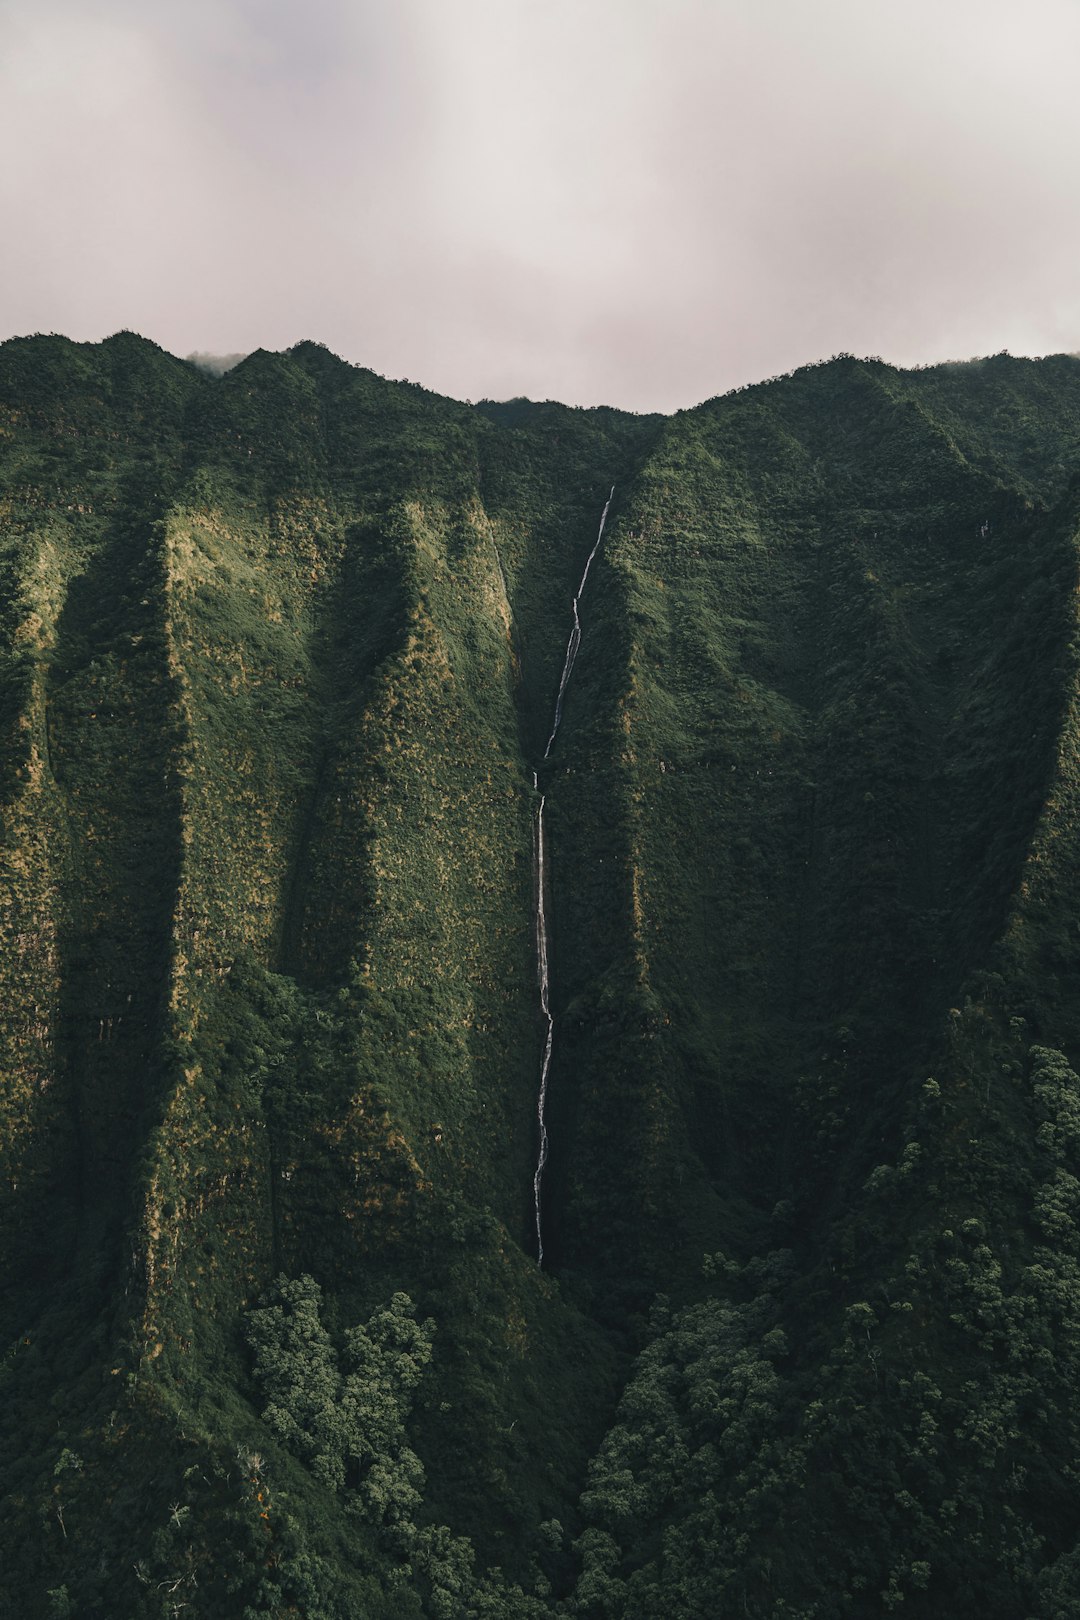 Cliff photo spot Kauai Nā Pali Coast State Wilderness Park